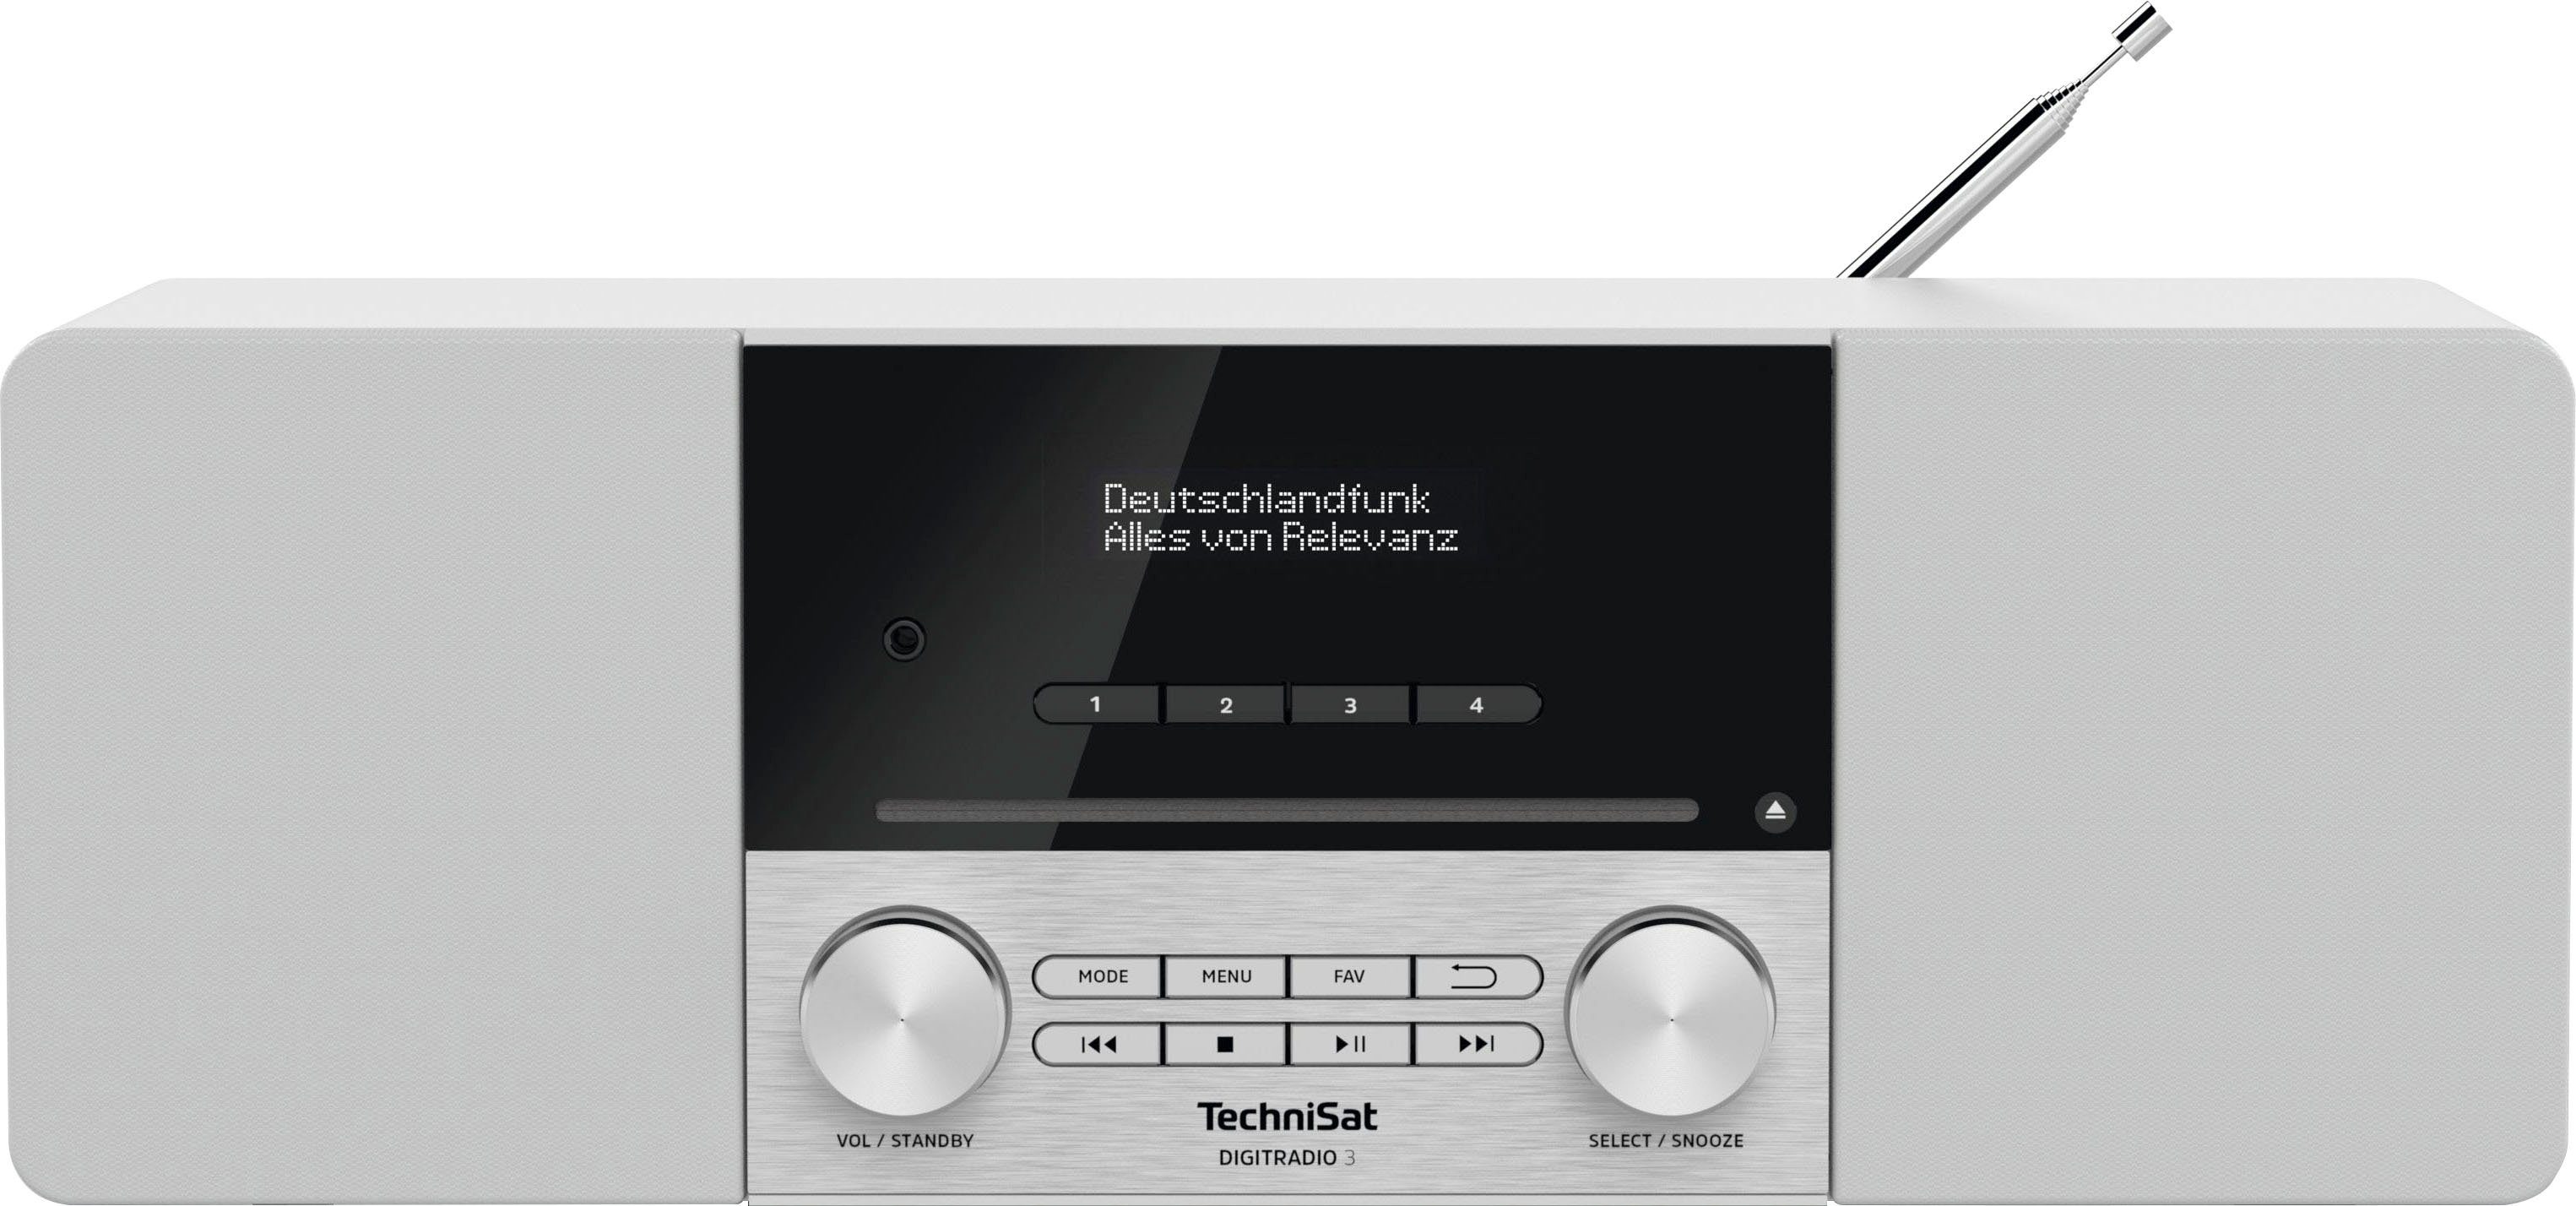 TechniSat UKW CD-Player, weiß W, 20 Digitalradio 3 (DAB), RDS, (DAB) (Digitalradio Made mit Germany) DIGITRADIO in